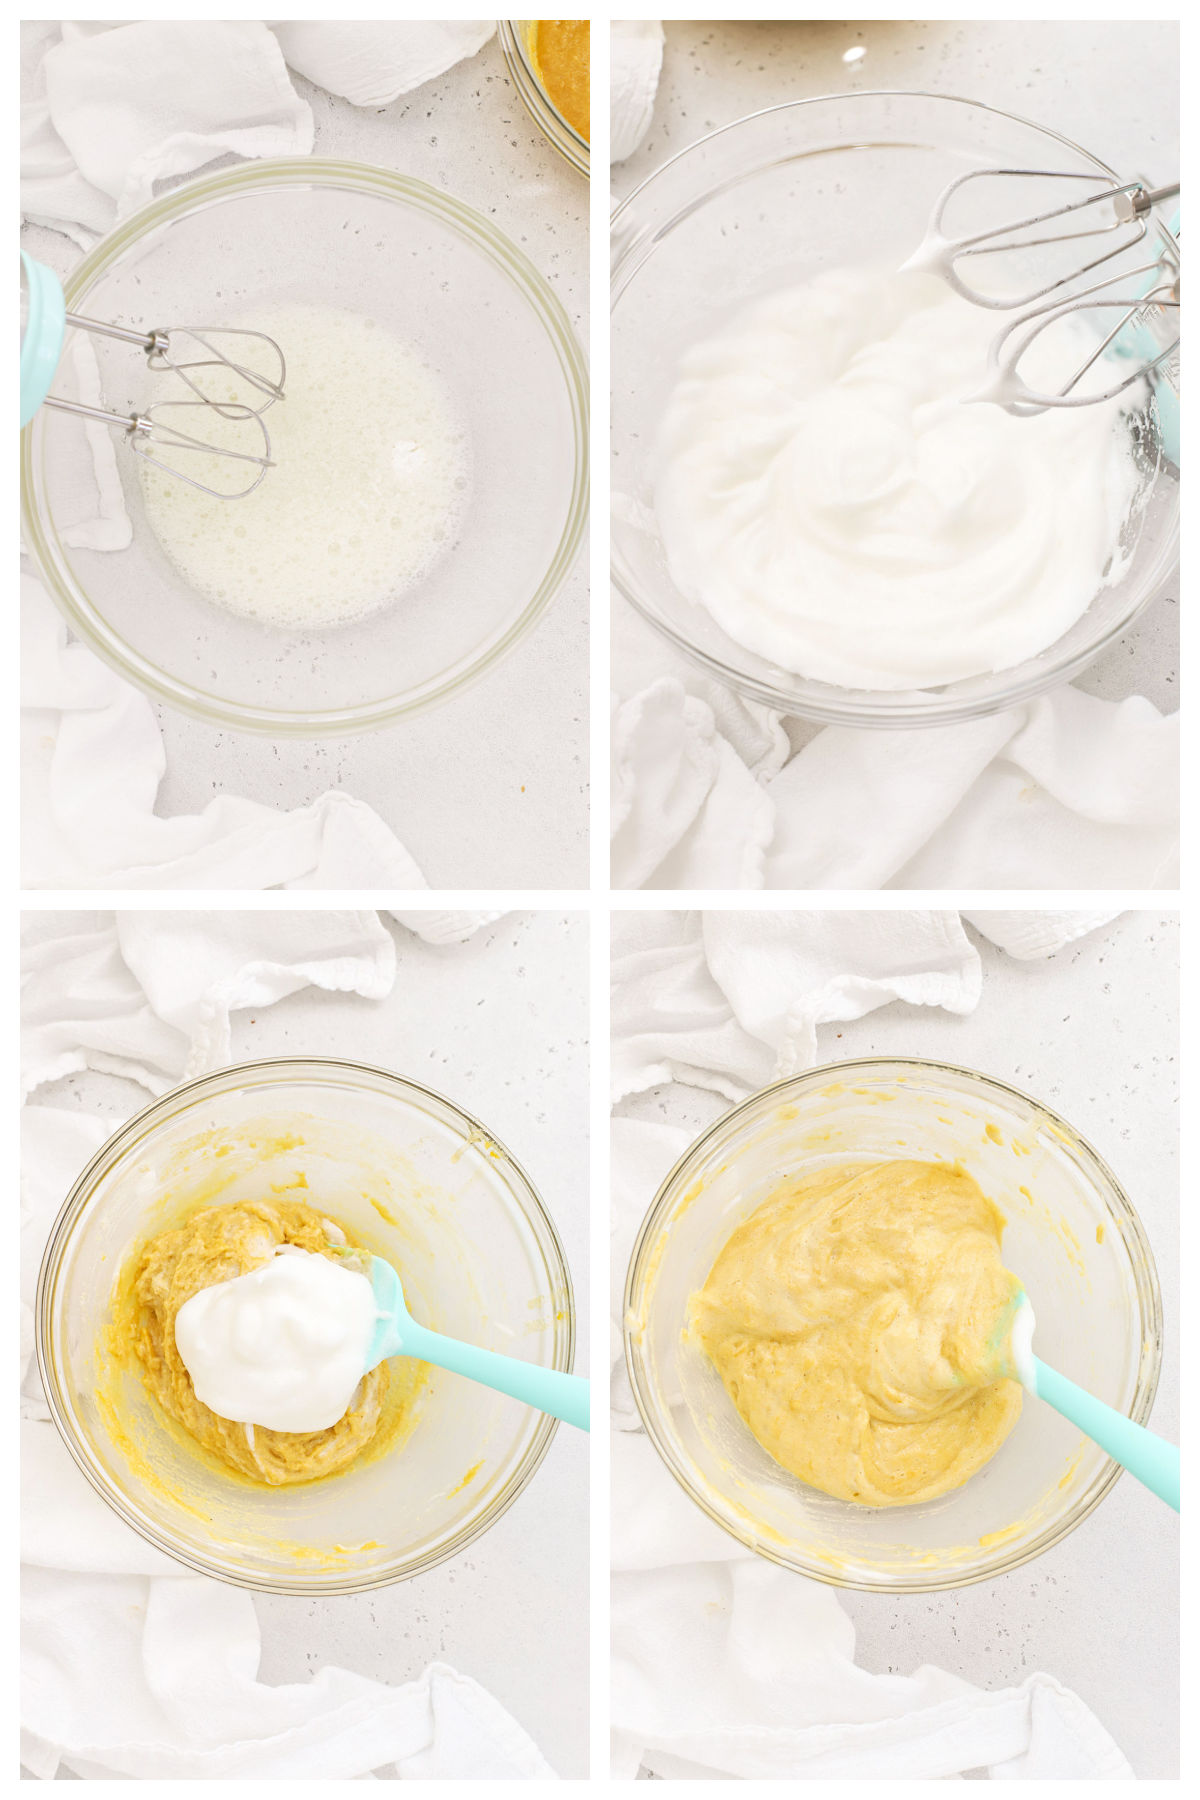 Making almond flour lemon cake, step by step